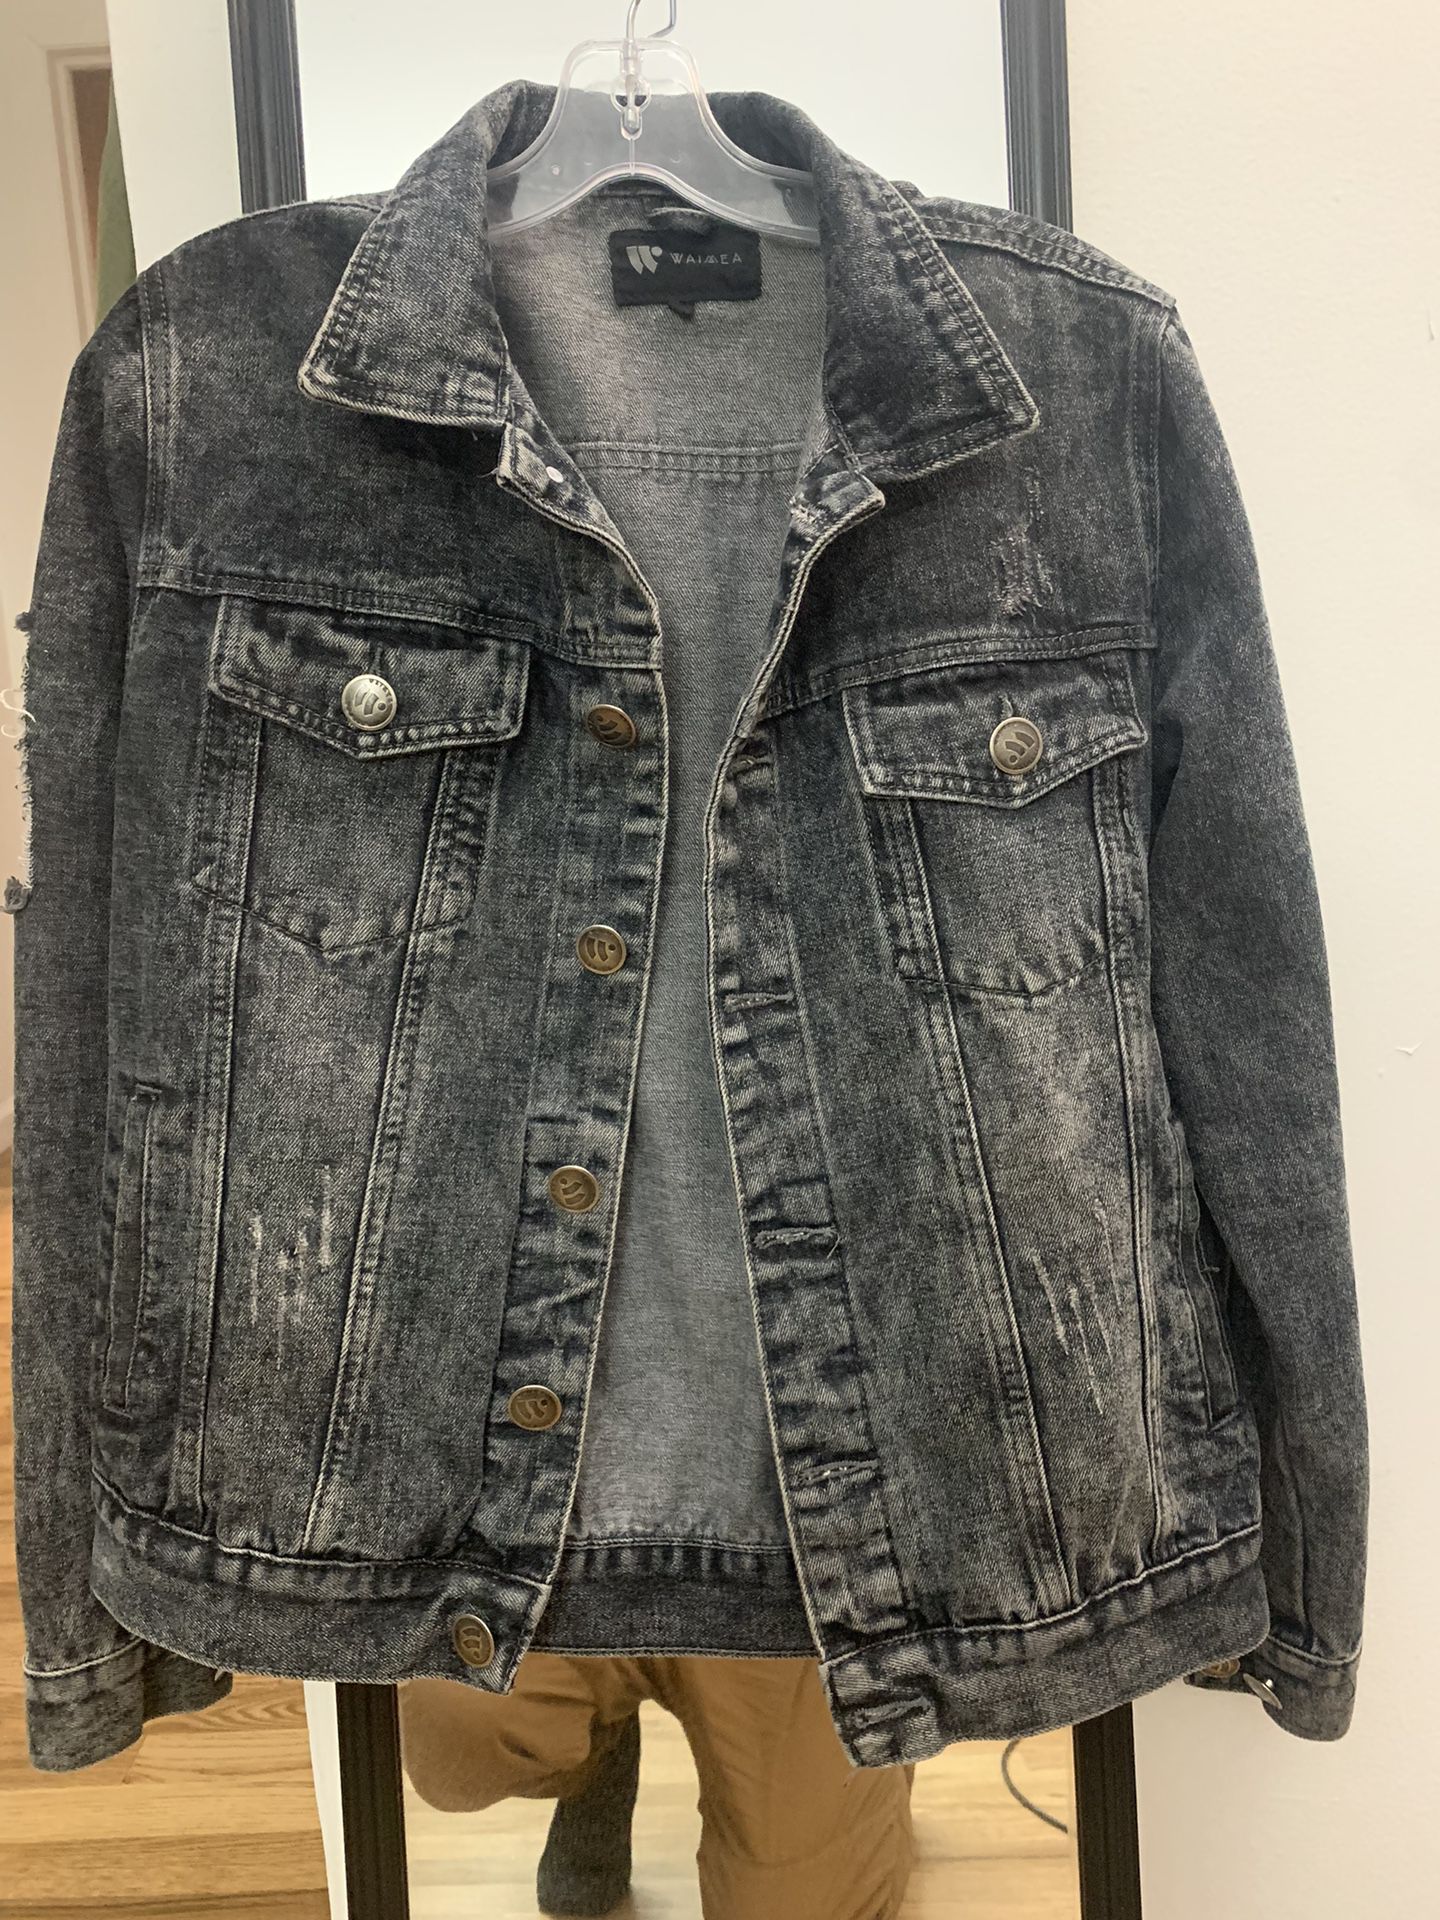 Vintage Style Jean Jacket 